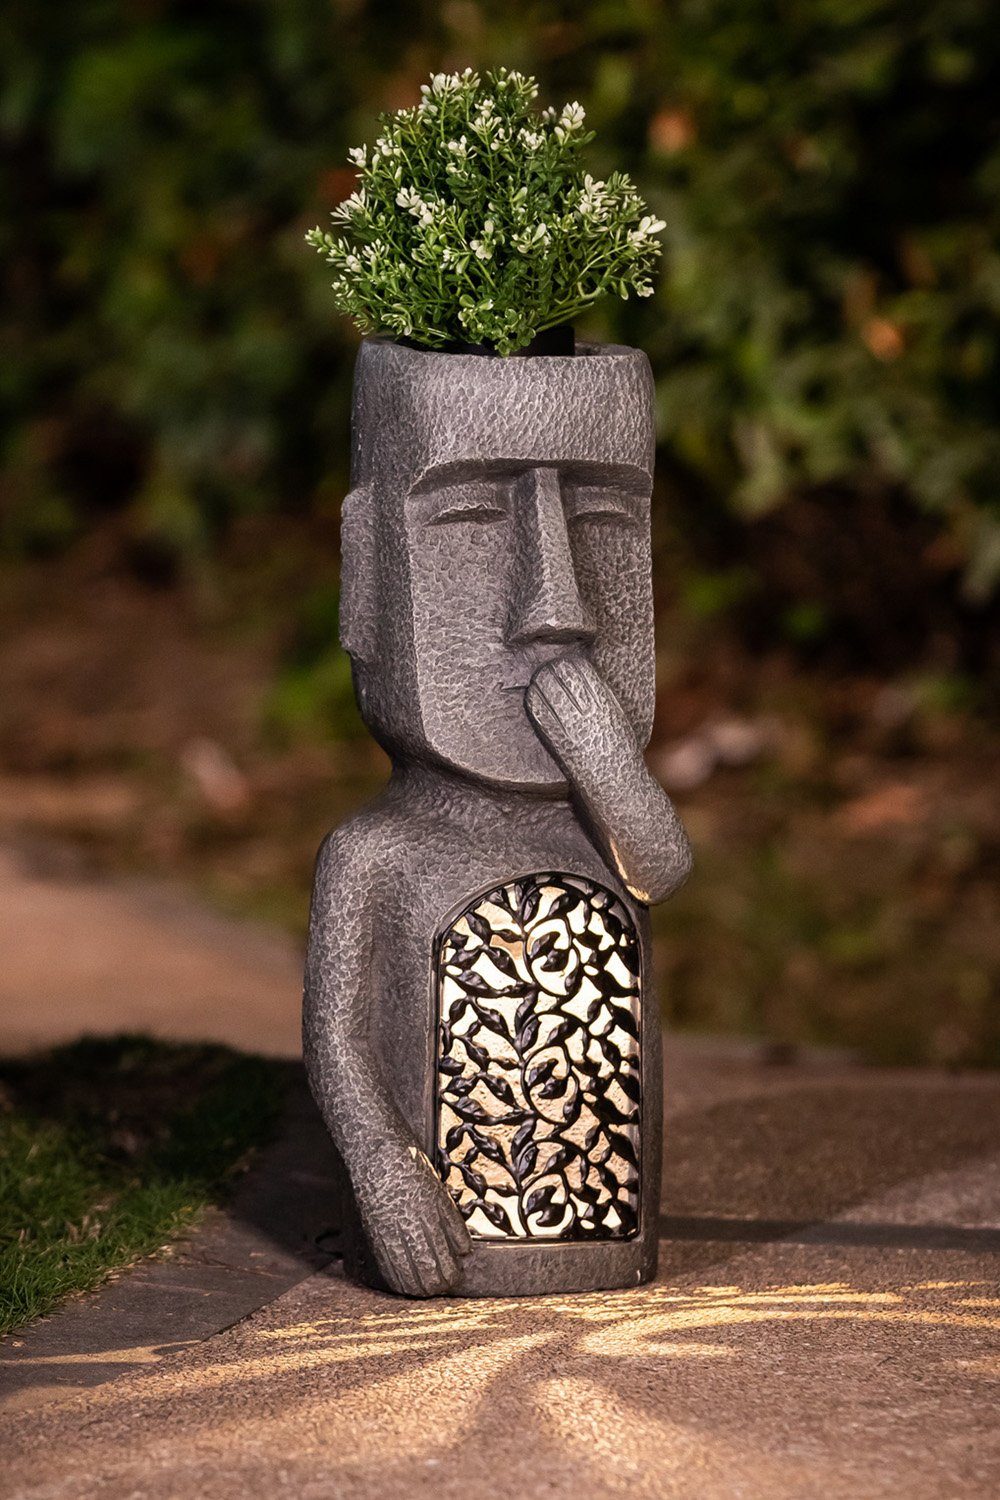 Solarlampe, bepflanzbar Figur Gartendeko, LED bepflanzbar, cm 22x18x52 Deko Solarleuchte integriert, warmweiß, Arnusa LED Moai fest Gartenfigur